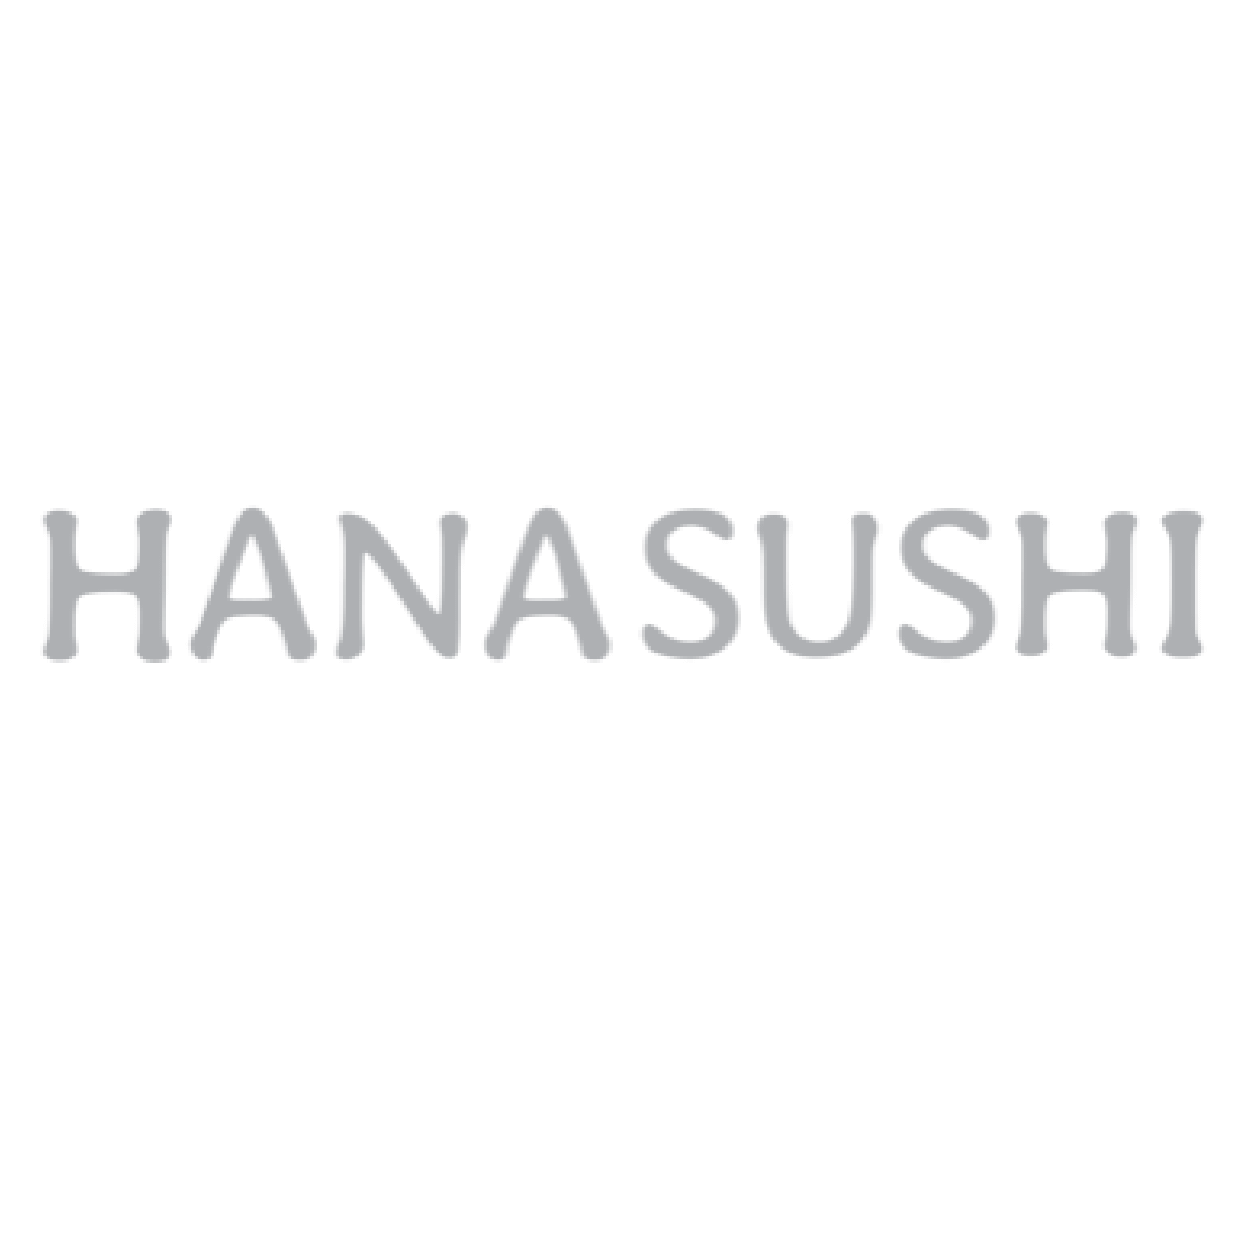 Hana Sushi